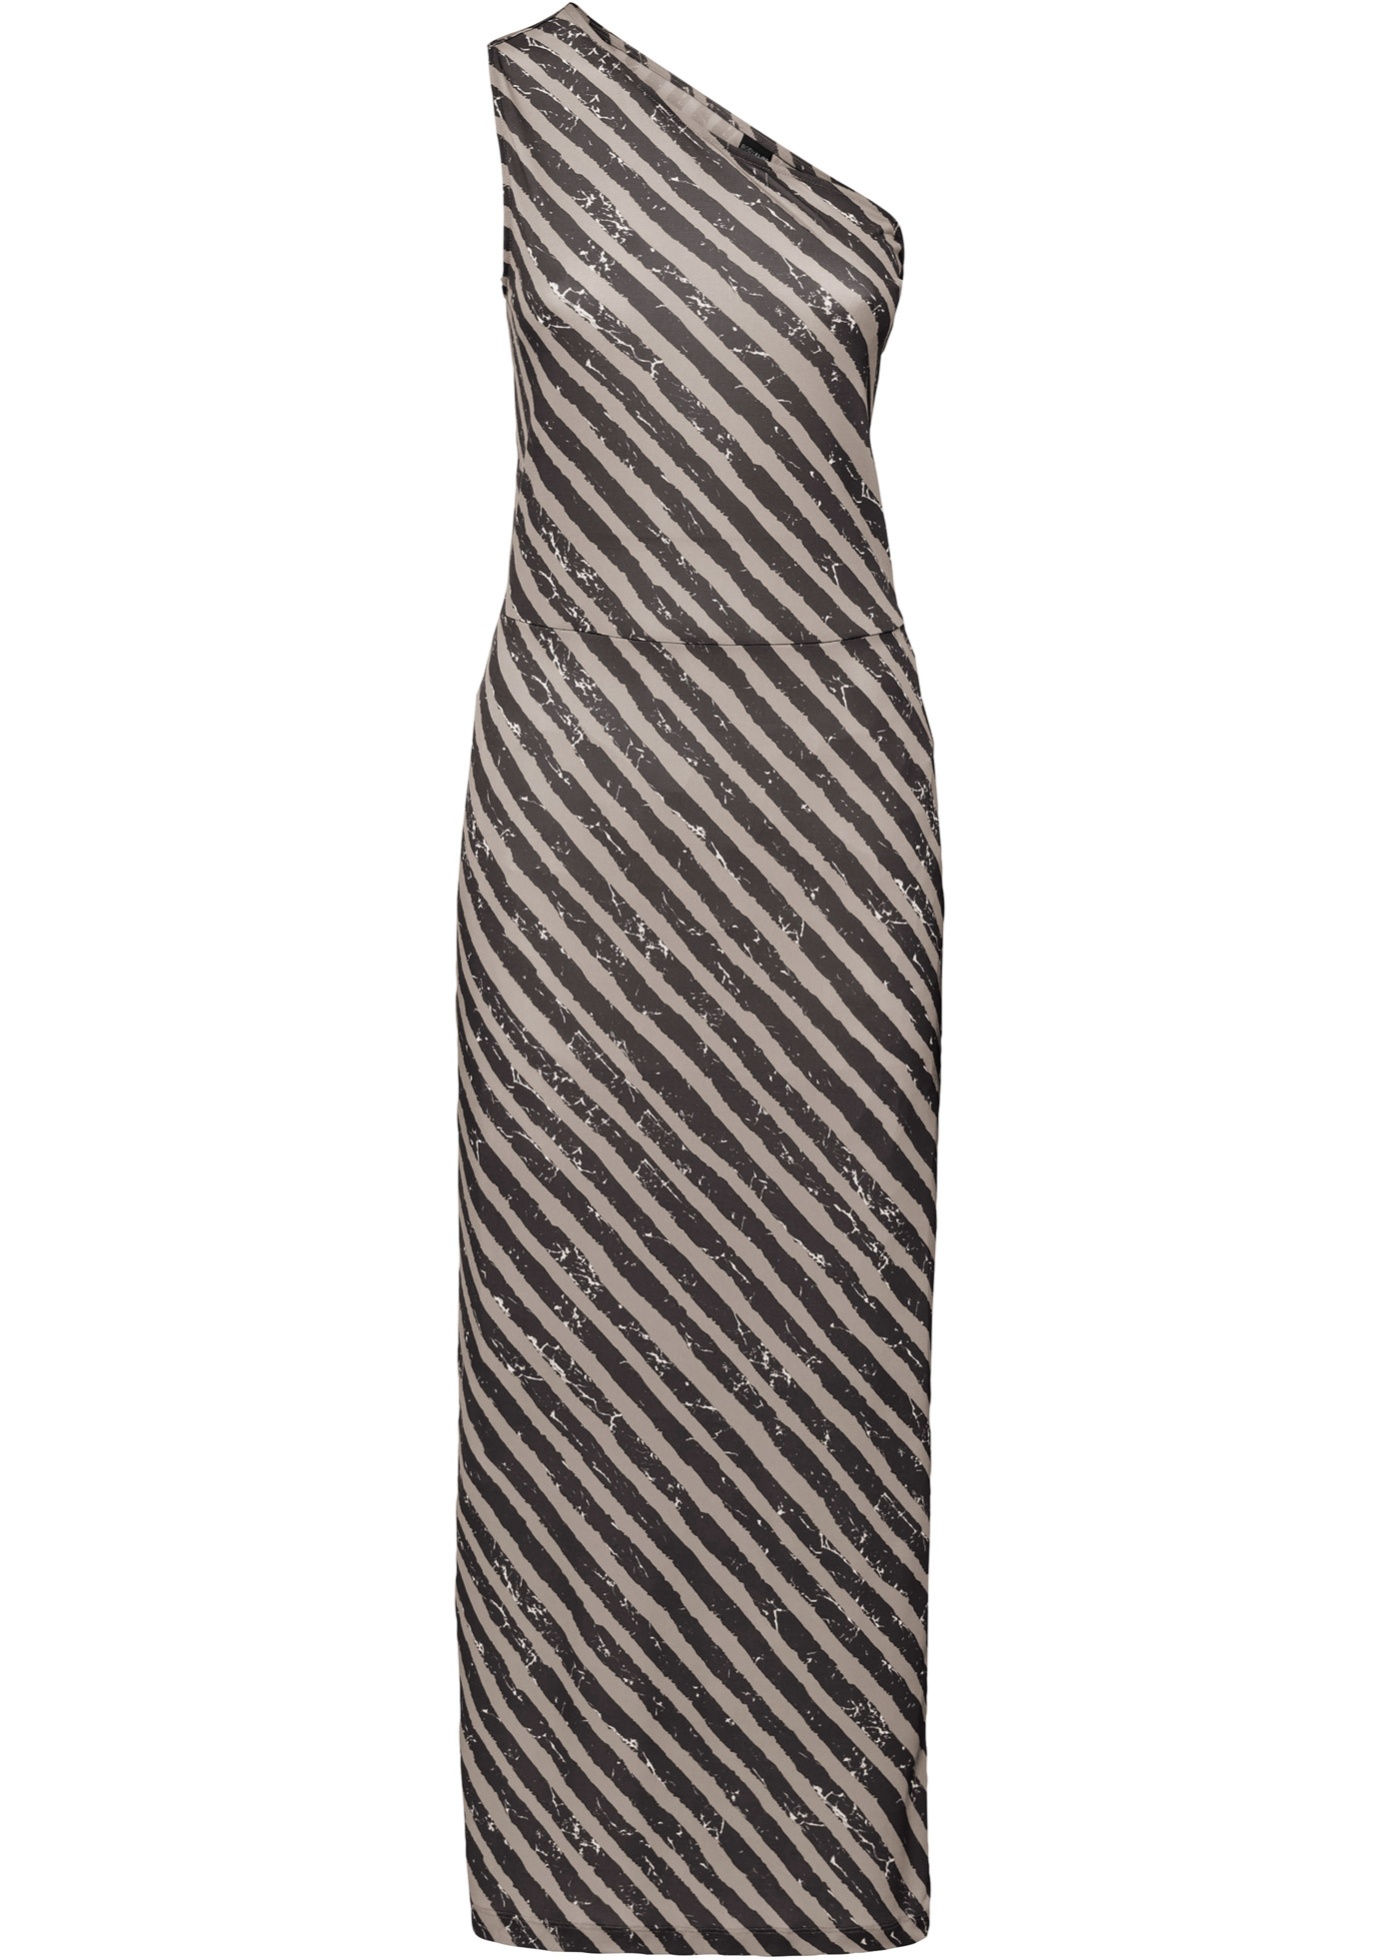 Figurbetontes One-Shoulder-Kleid in langer Passform. (97502895) in braun gestreift